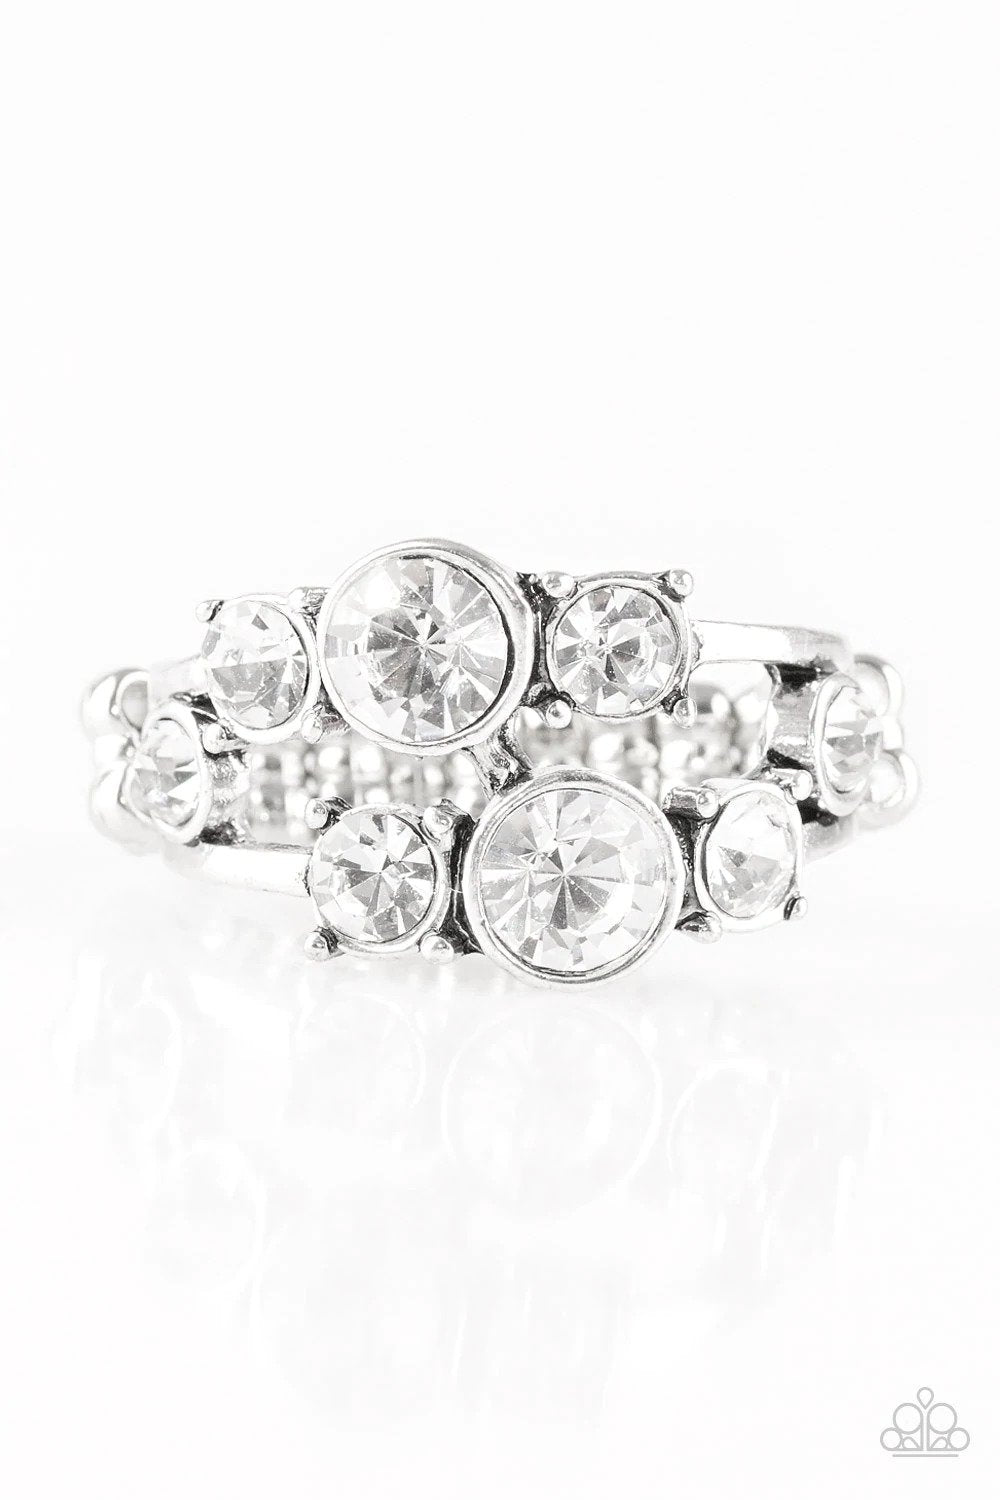 Interstellar Fashion White Ring - Paparazzi Accessories- lightbox - CarasShop.com - $5 Jewelry by Cara Jewels